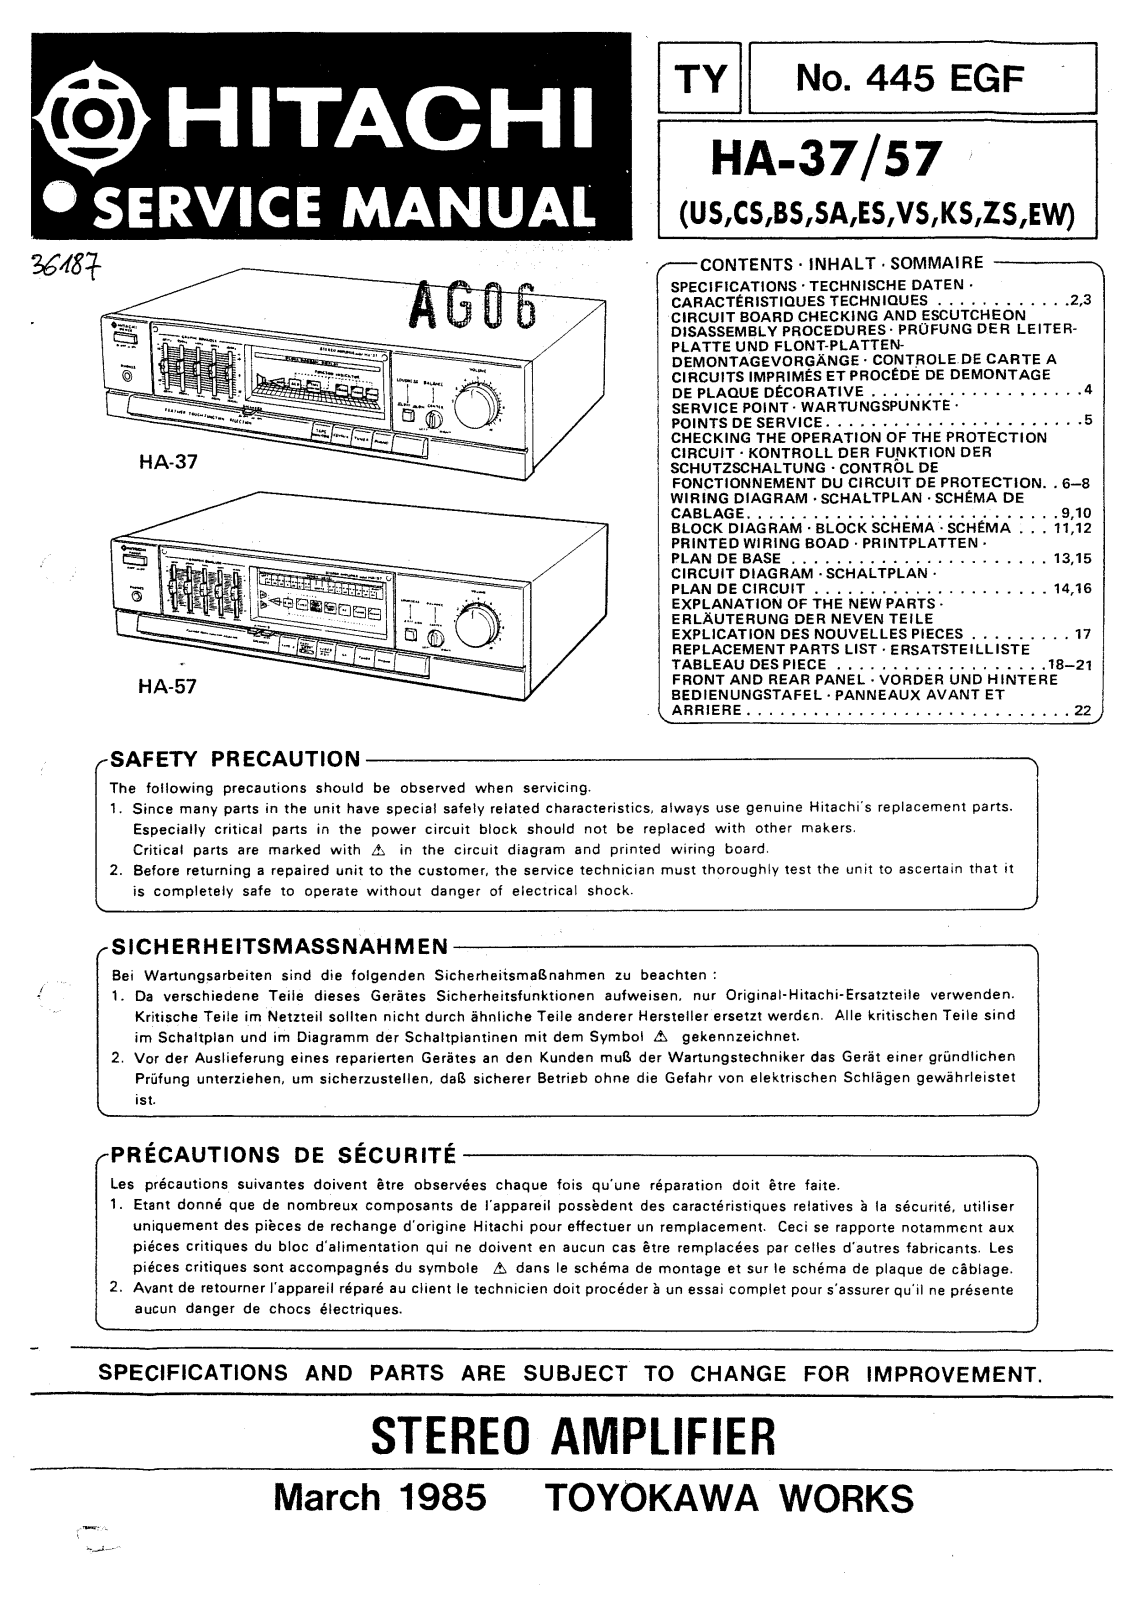 Hitachi HA-37, HA-57 User Manual